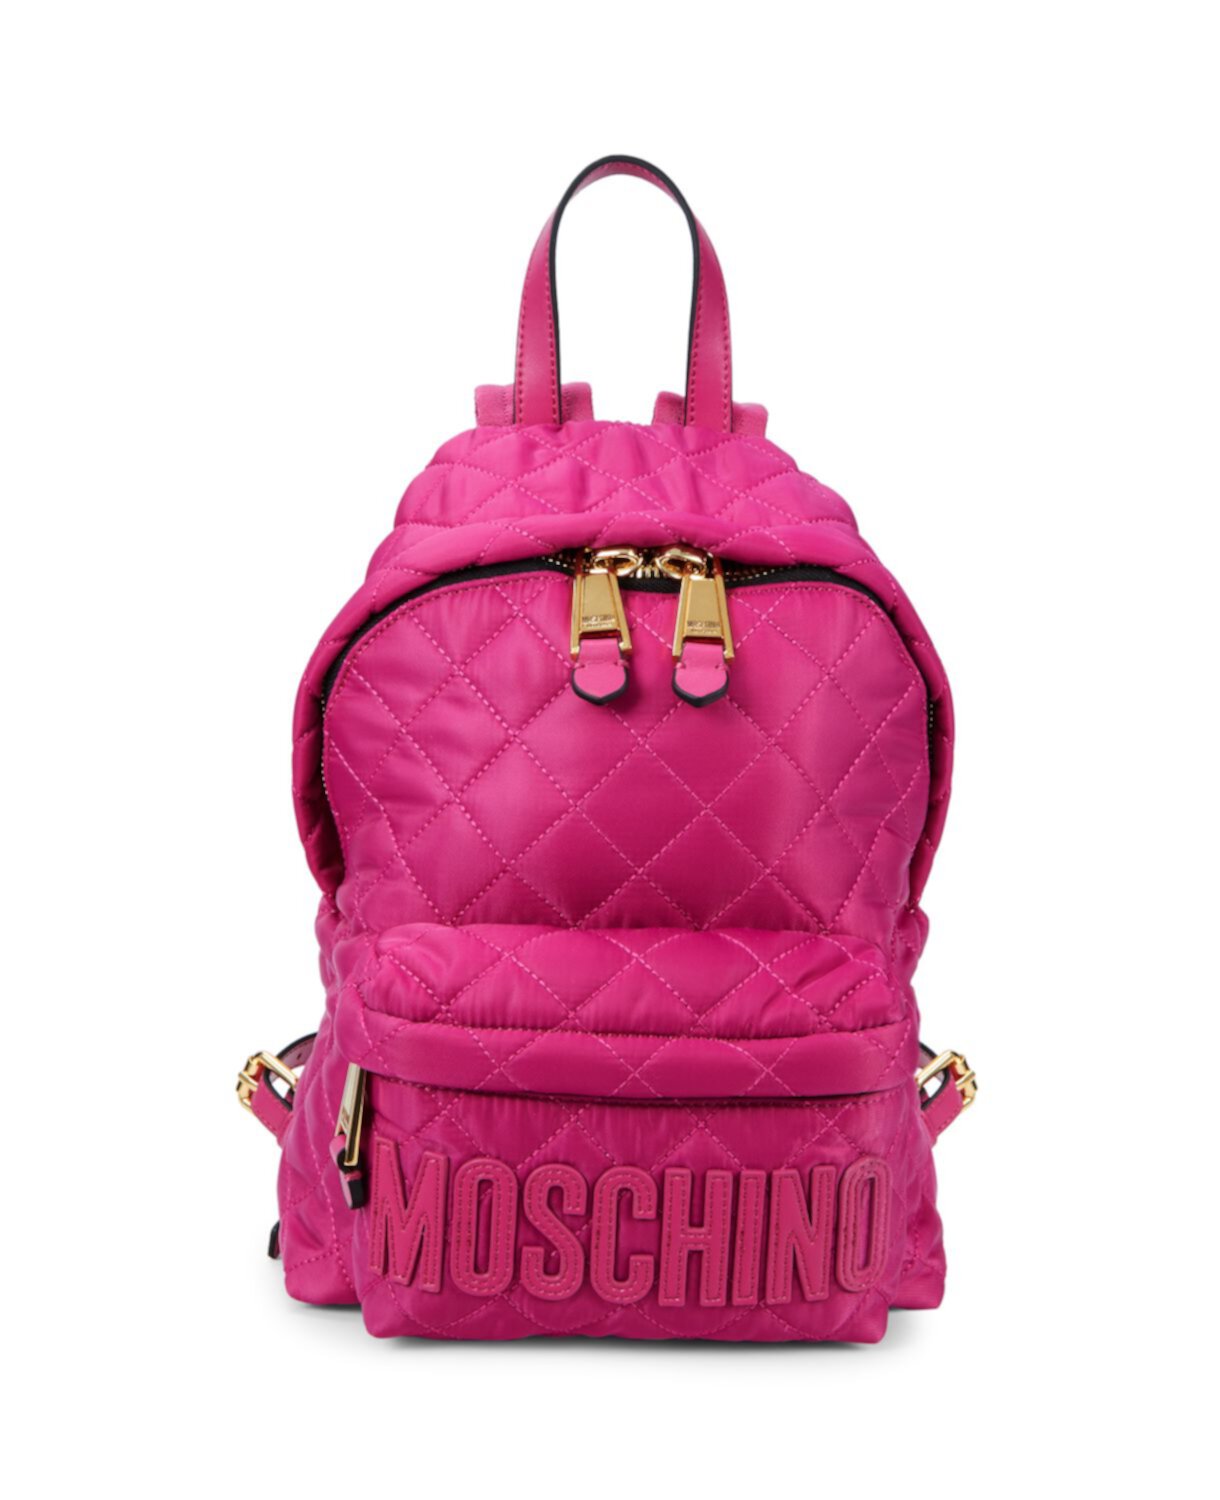 Стеганый рюкзак с логотипом Moschino